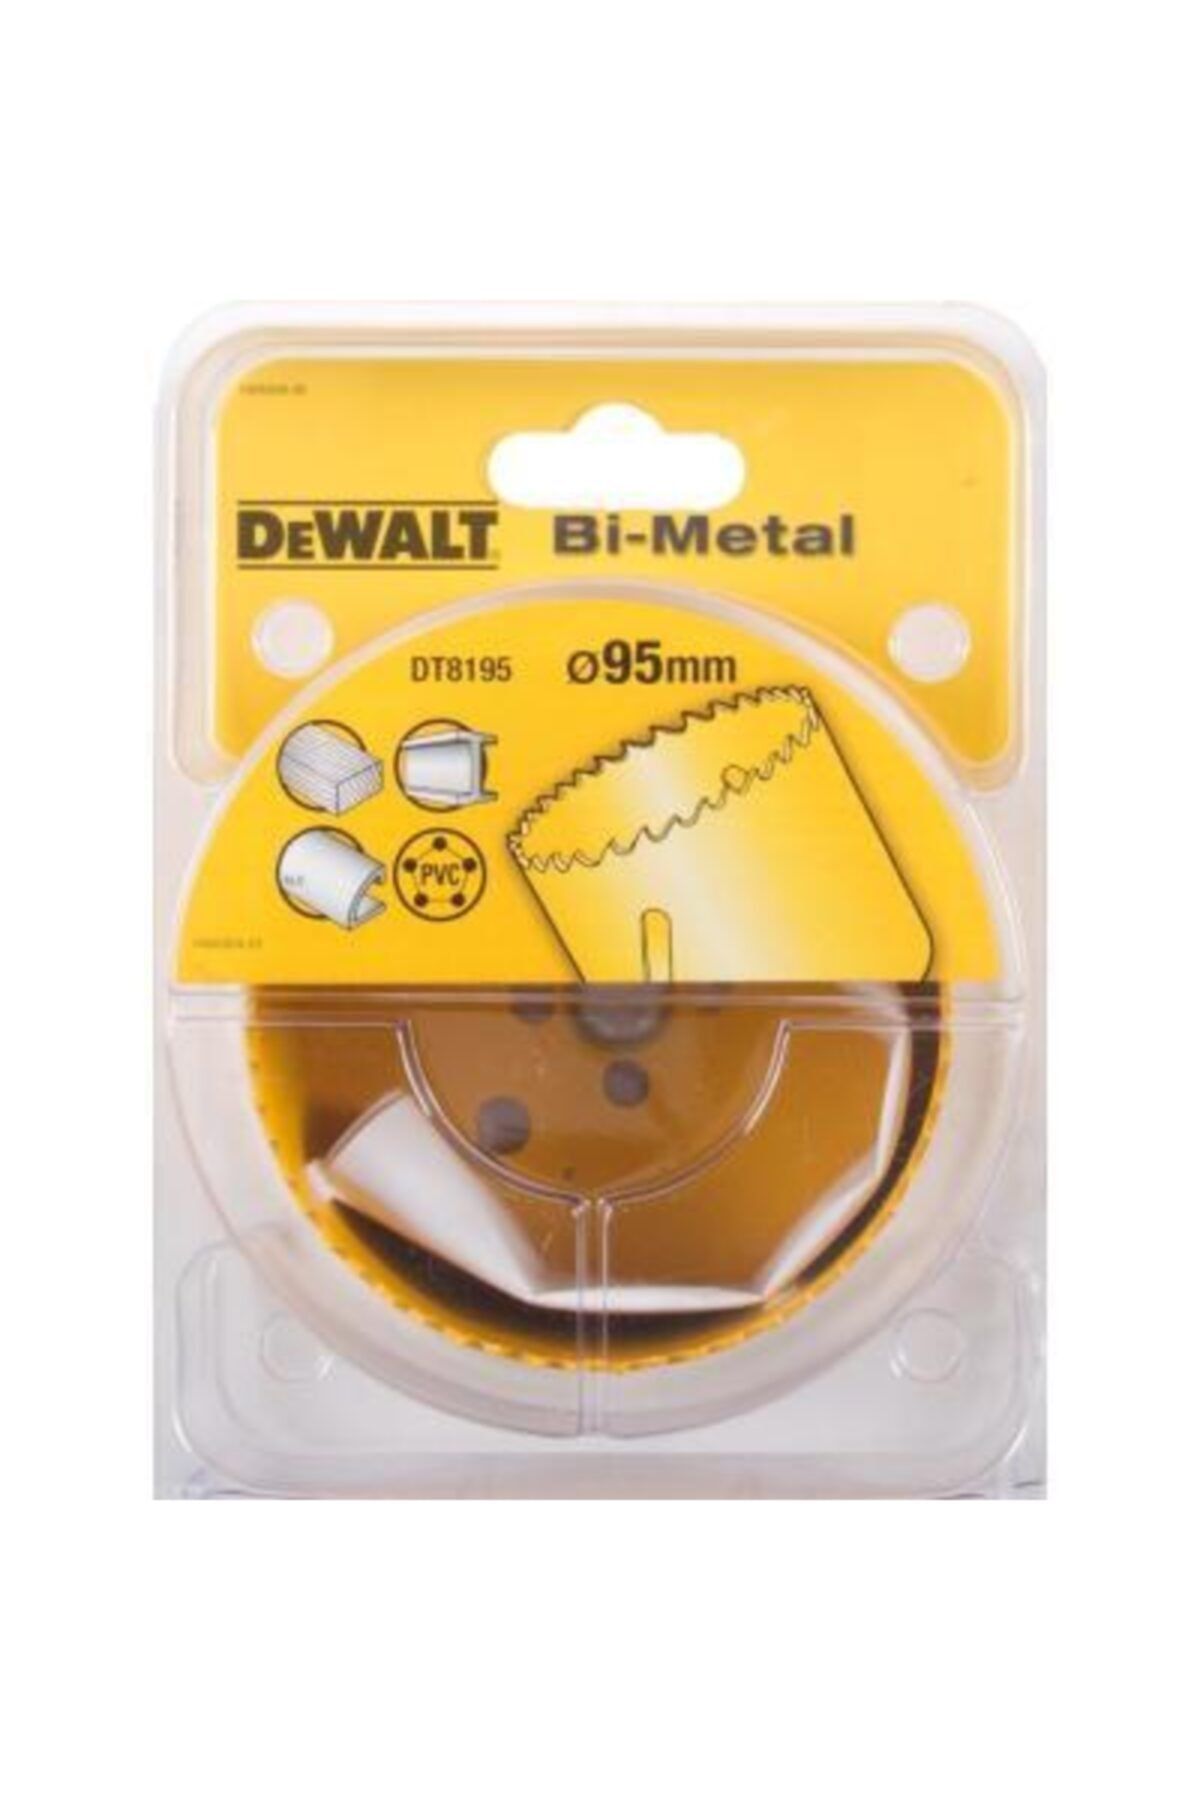 Dewalt - Bi-metal Delik Testere 95 Mm.